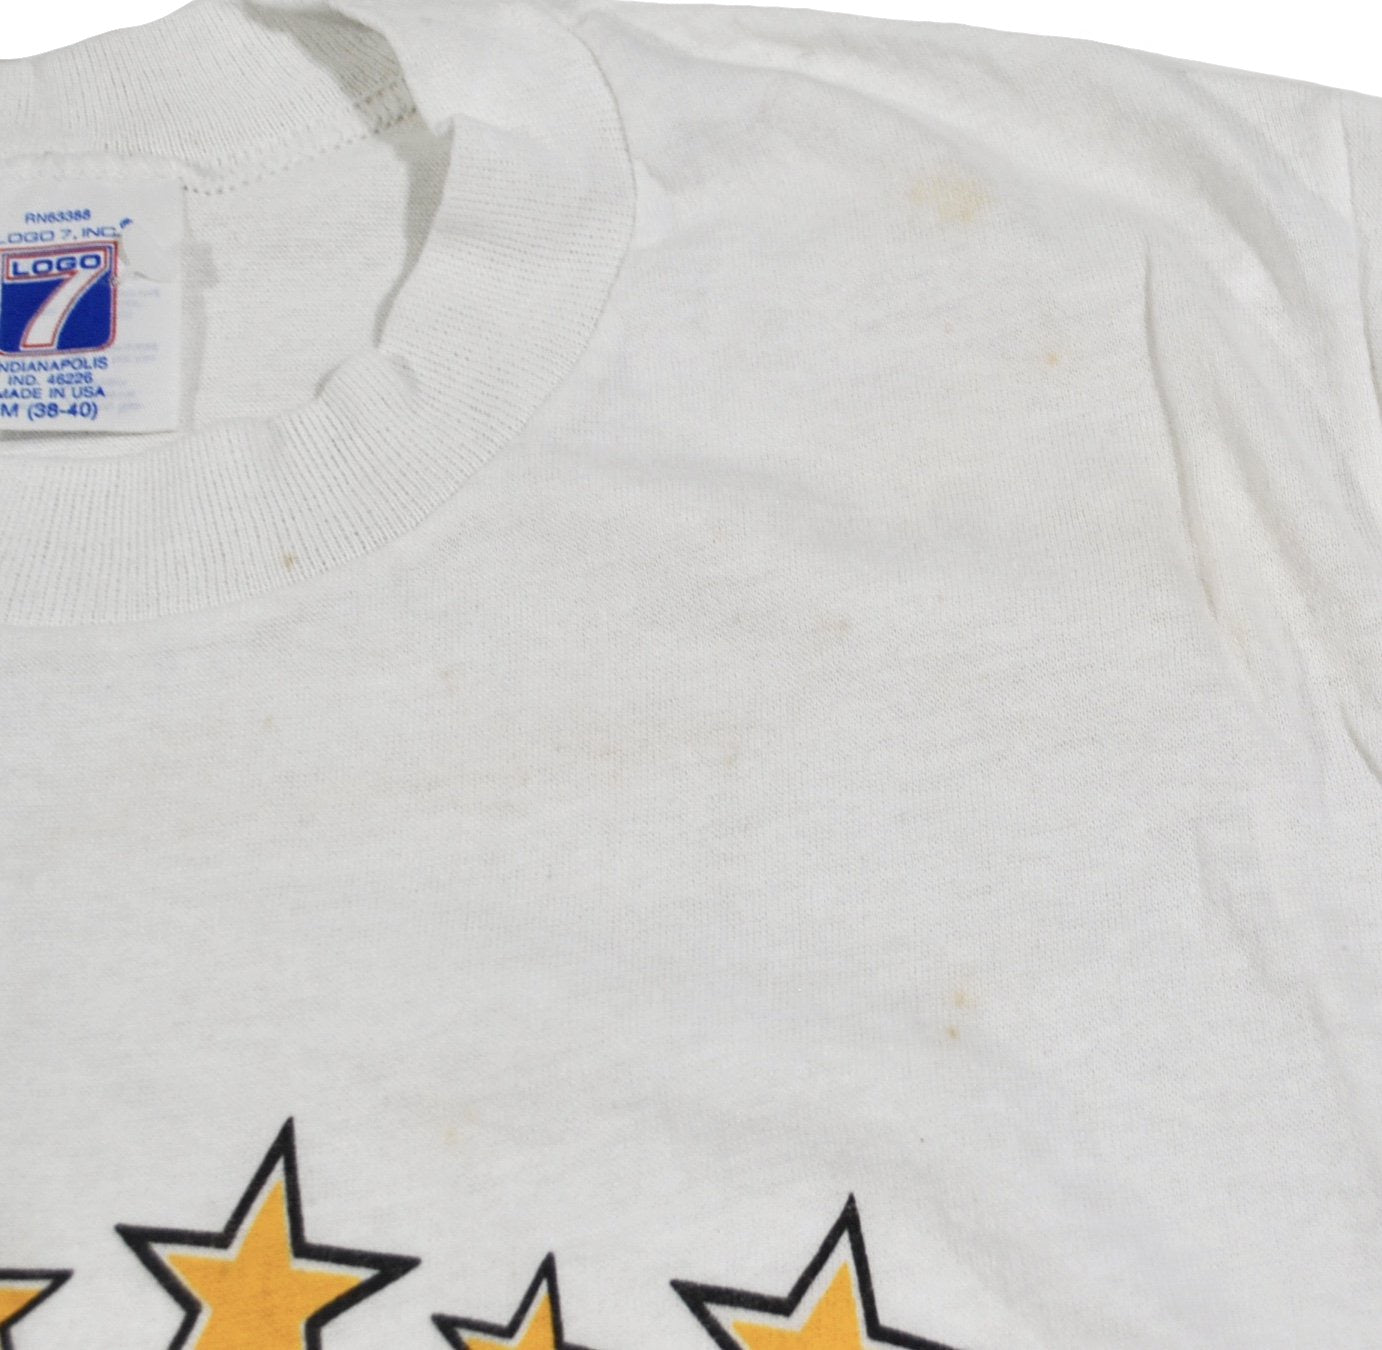 1990 Chicago Cubs All-Star Game shirt – Thriller